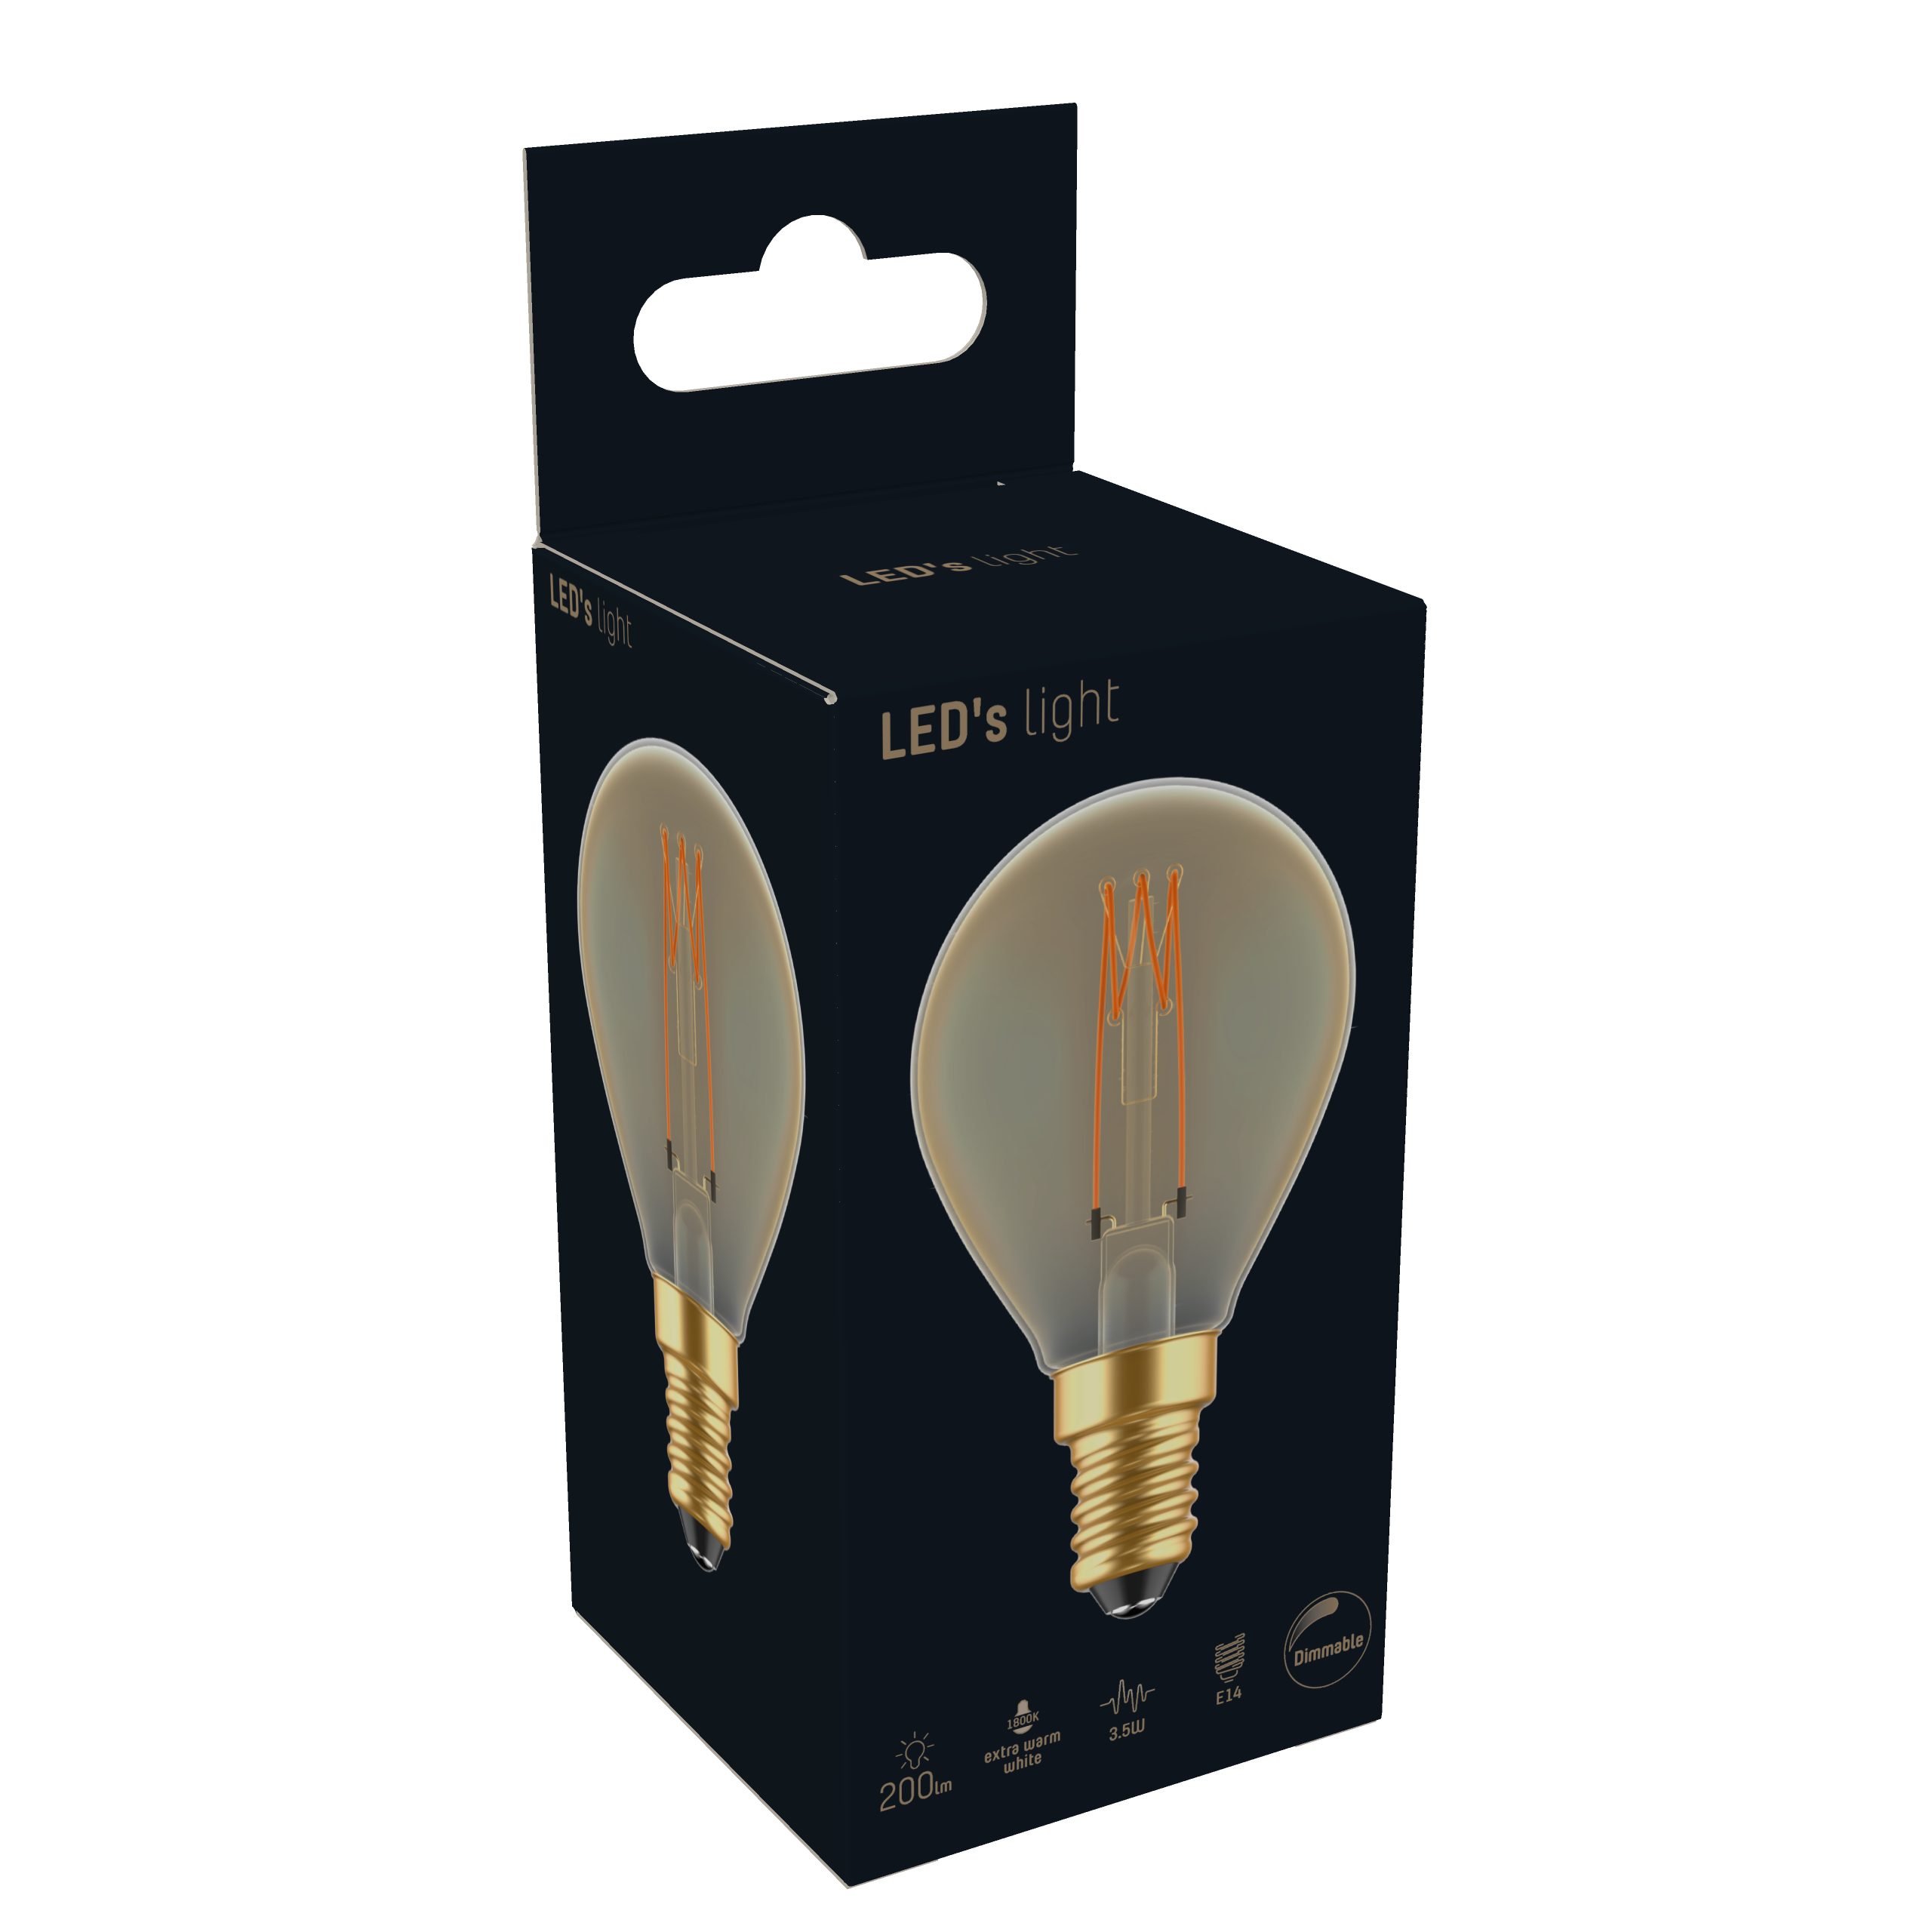 LED's light LED-Leuchtmittel 0620190 G45 2.5W E14, Gold extra-warmweiß LED dimmbar E14 Kugel